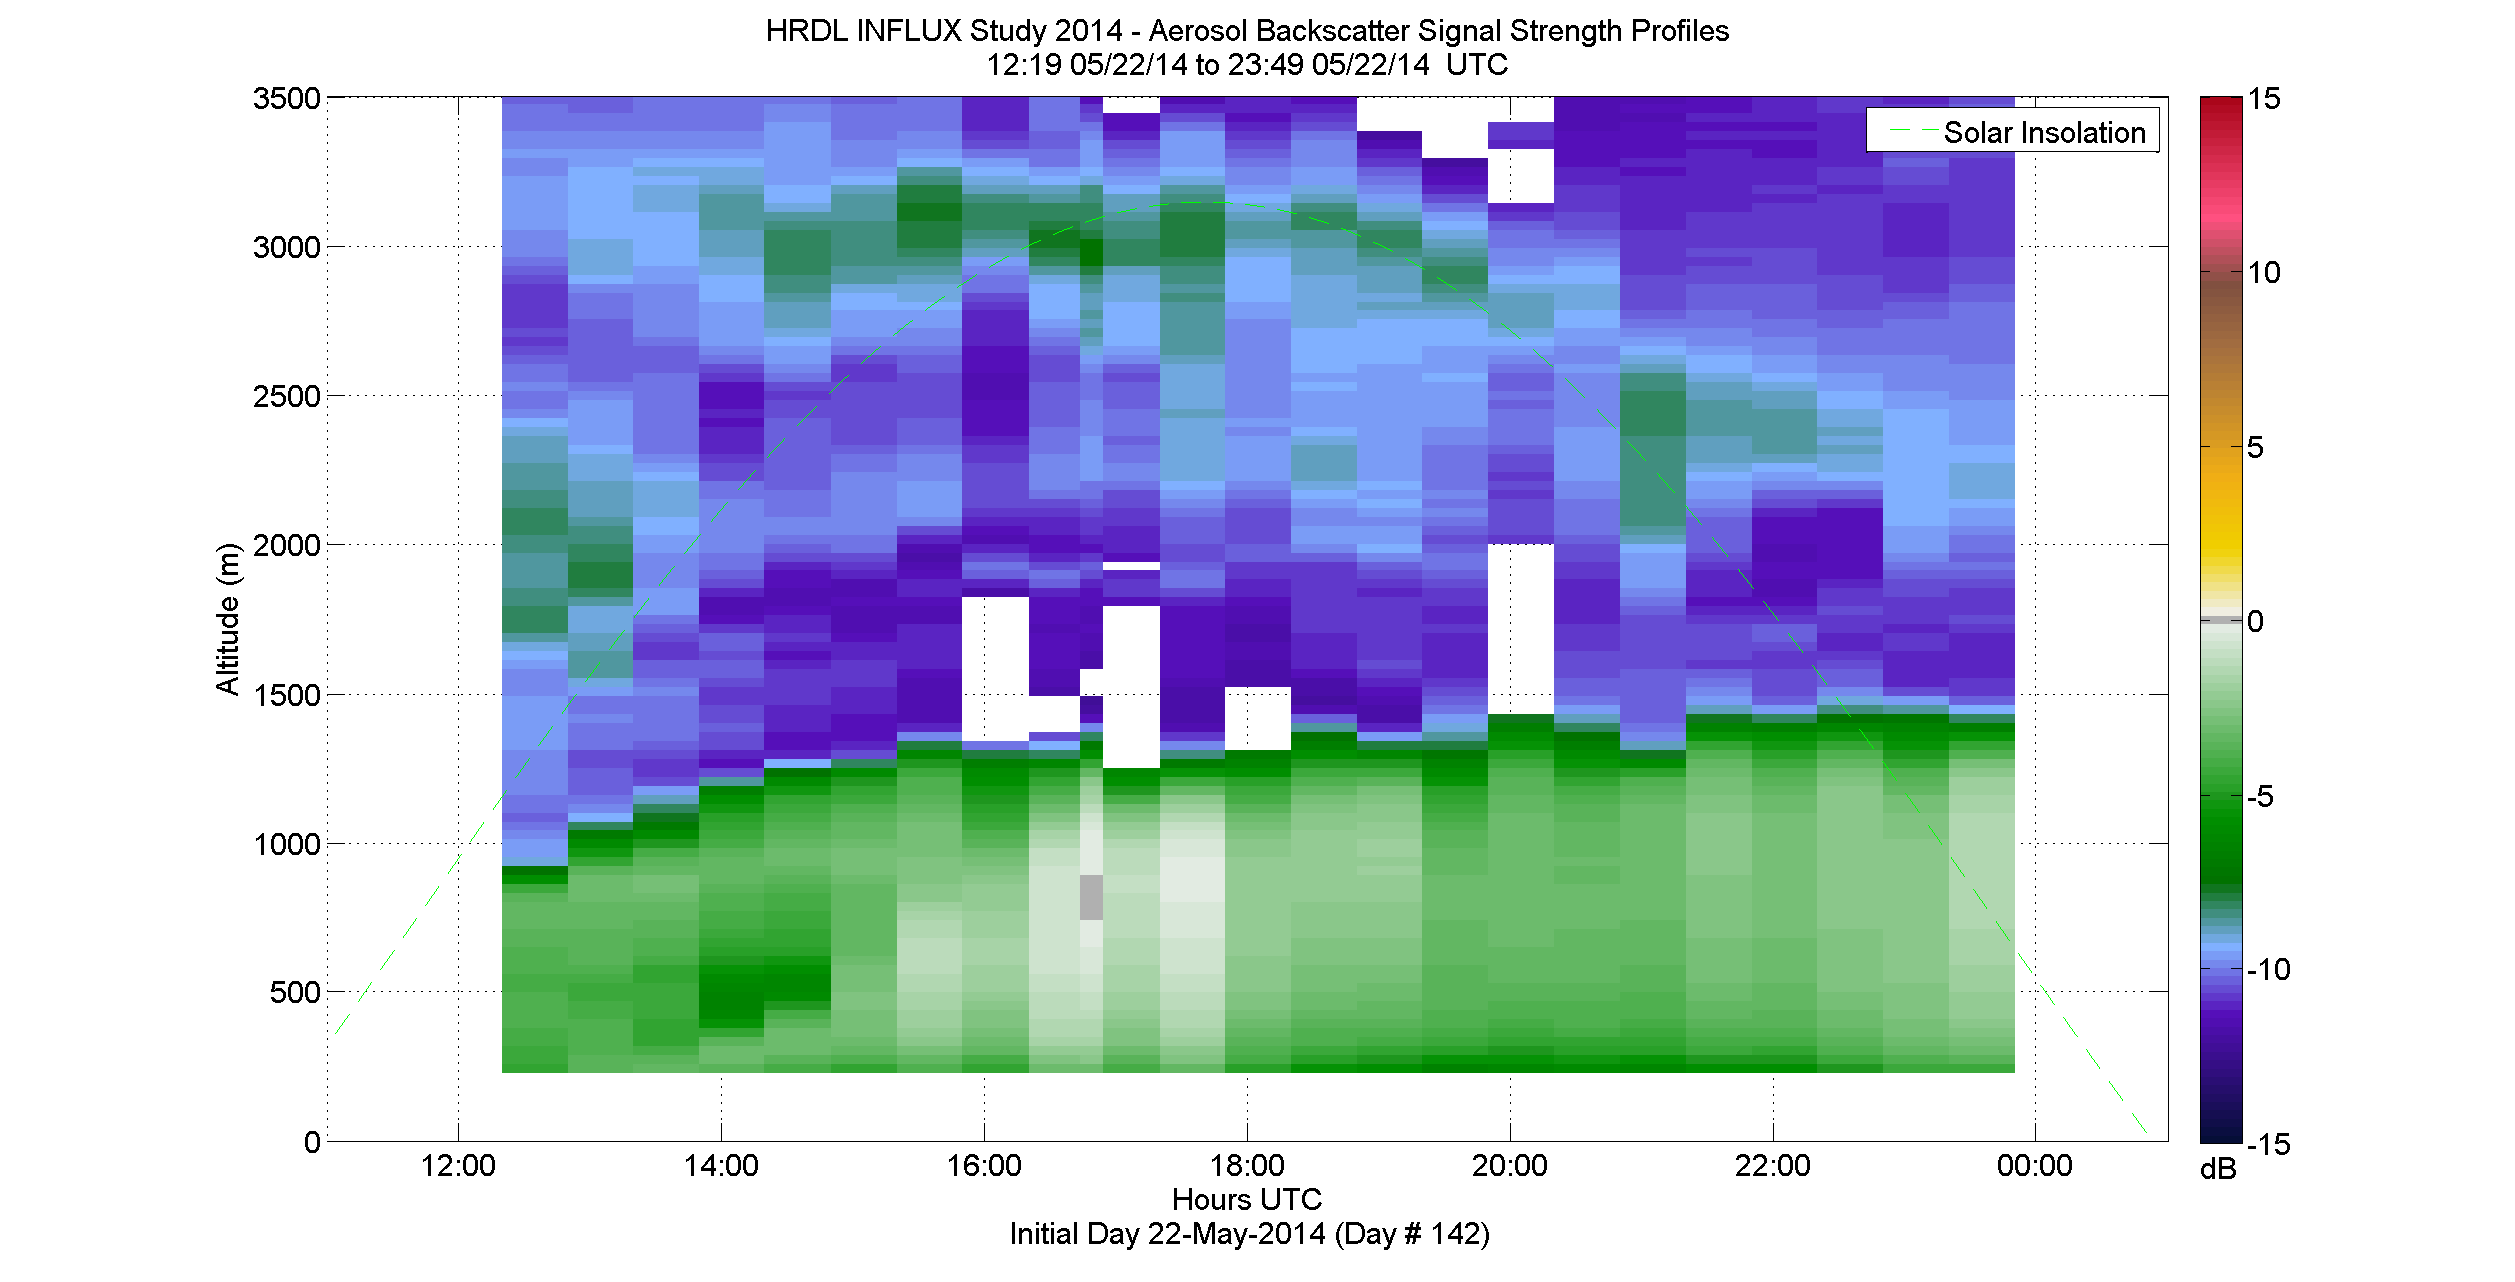 HRDL aerosol backscatter signal strength profile - May 22 pm